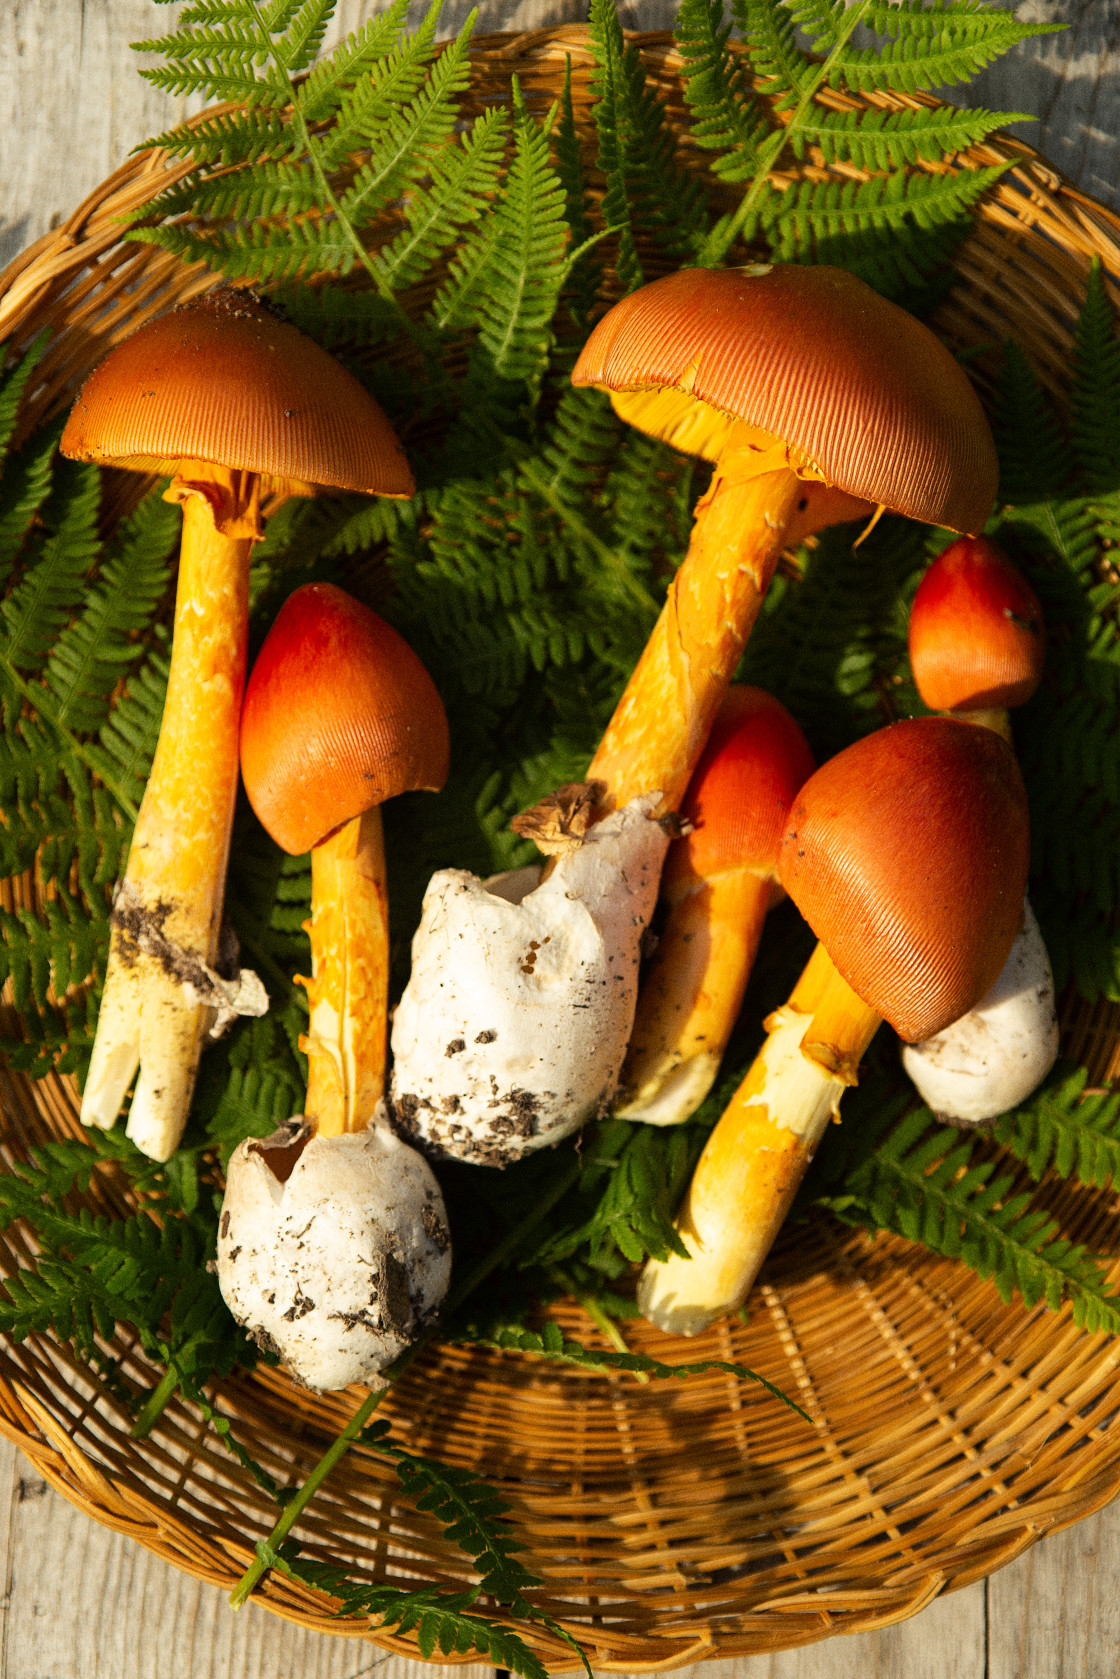 "Mushrooms" stock image